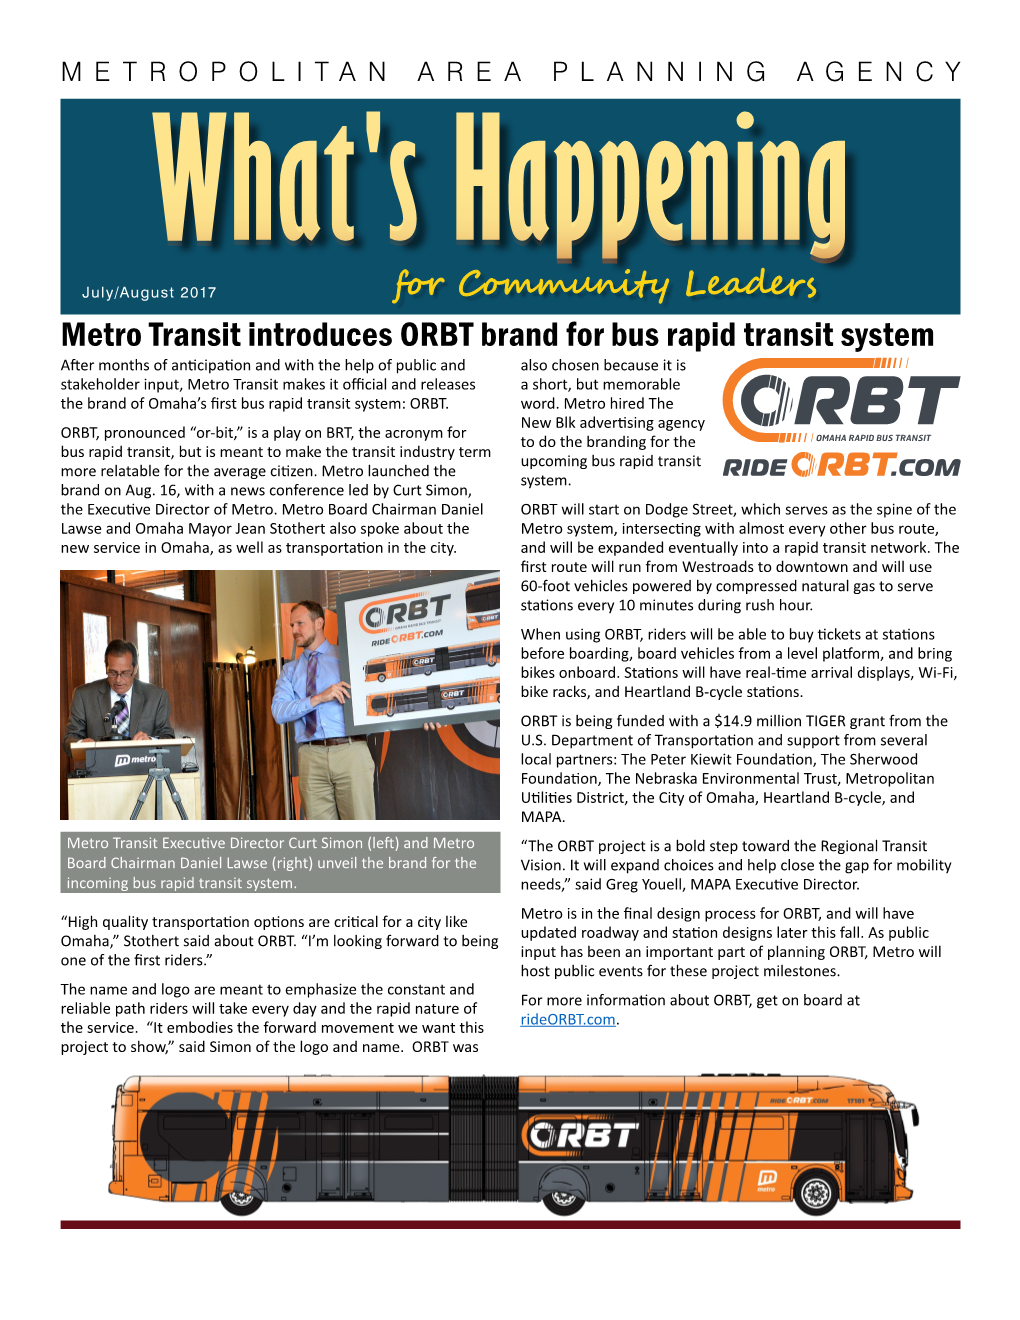 Metro Transit Introduces ORBT Brand for Bus Rapid Transit System